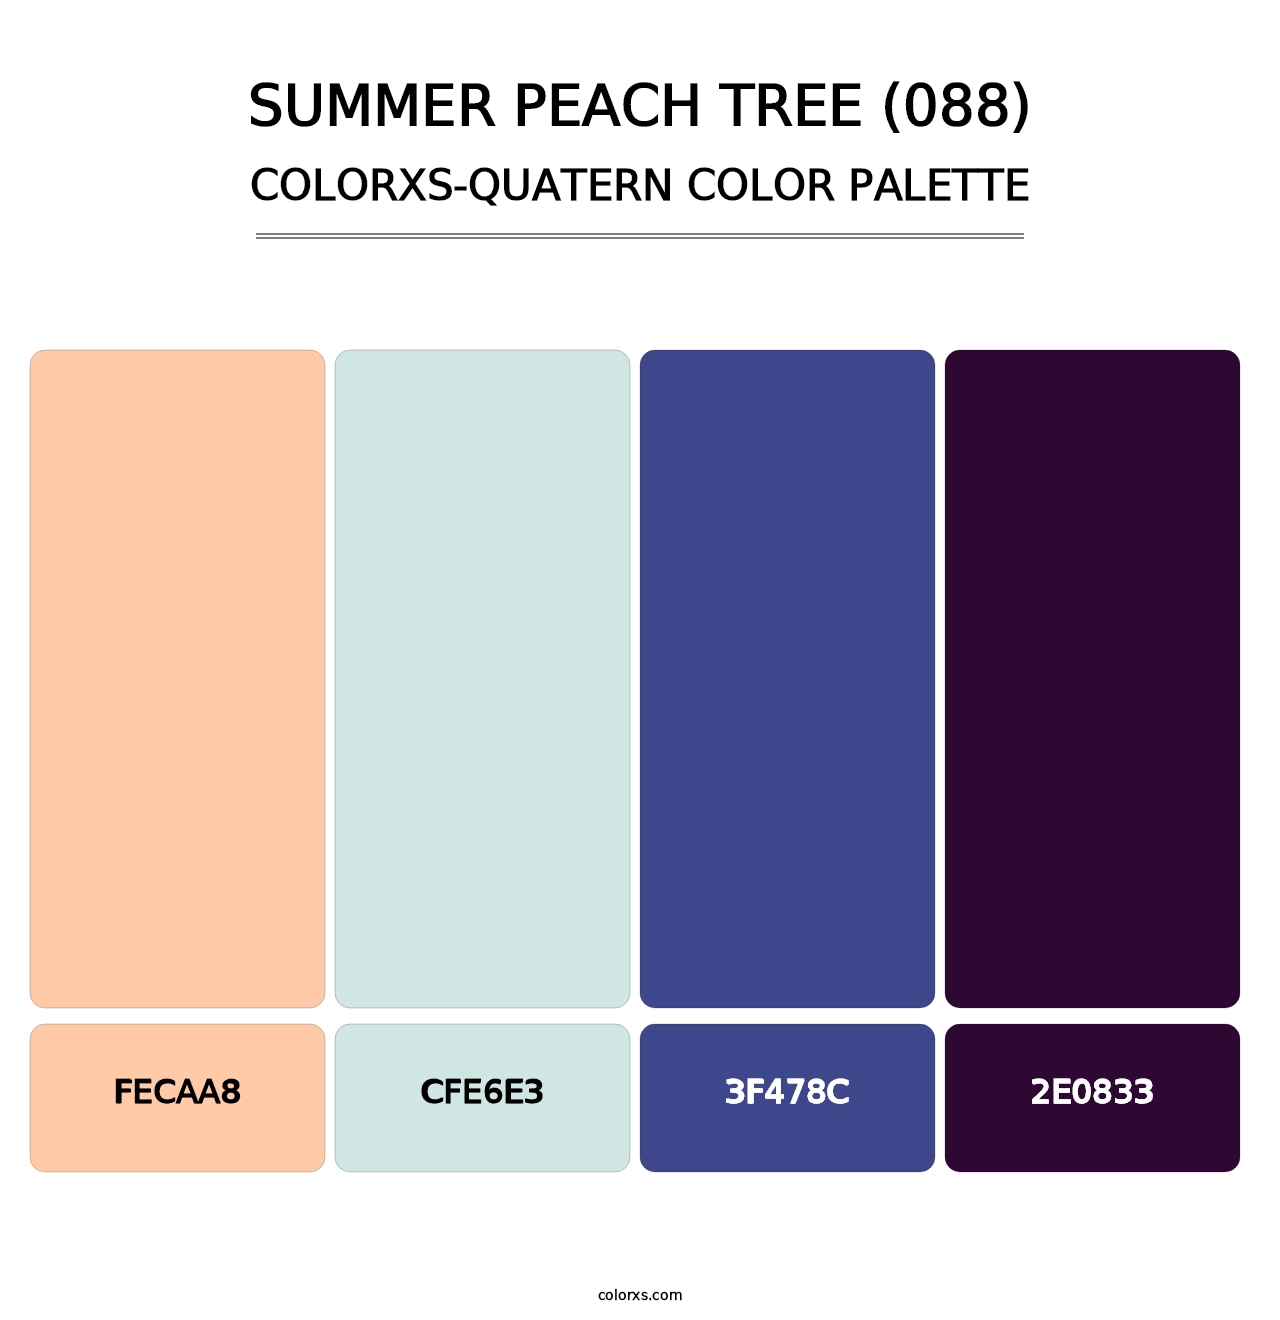 Summer Peach Tree (088) - Colorxs Quatern Palette